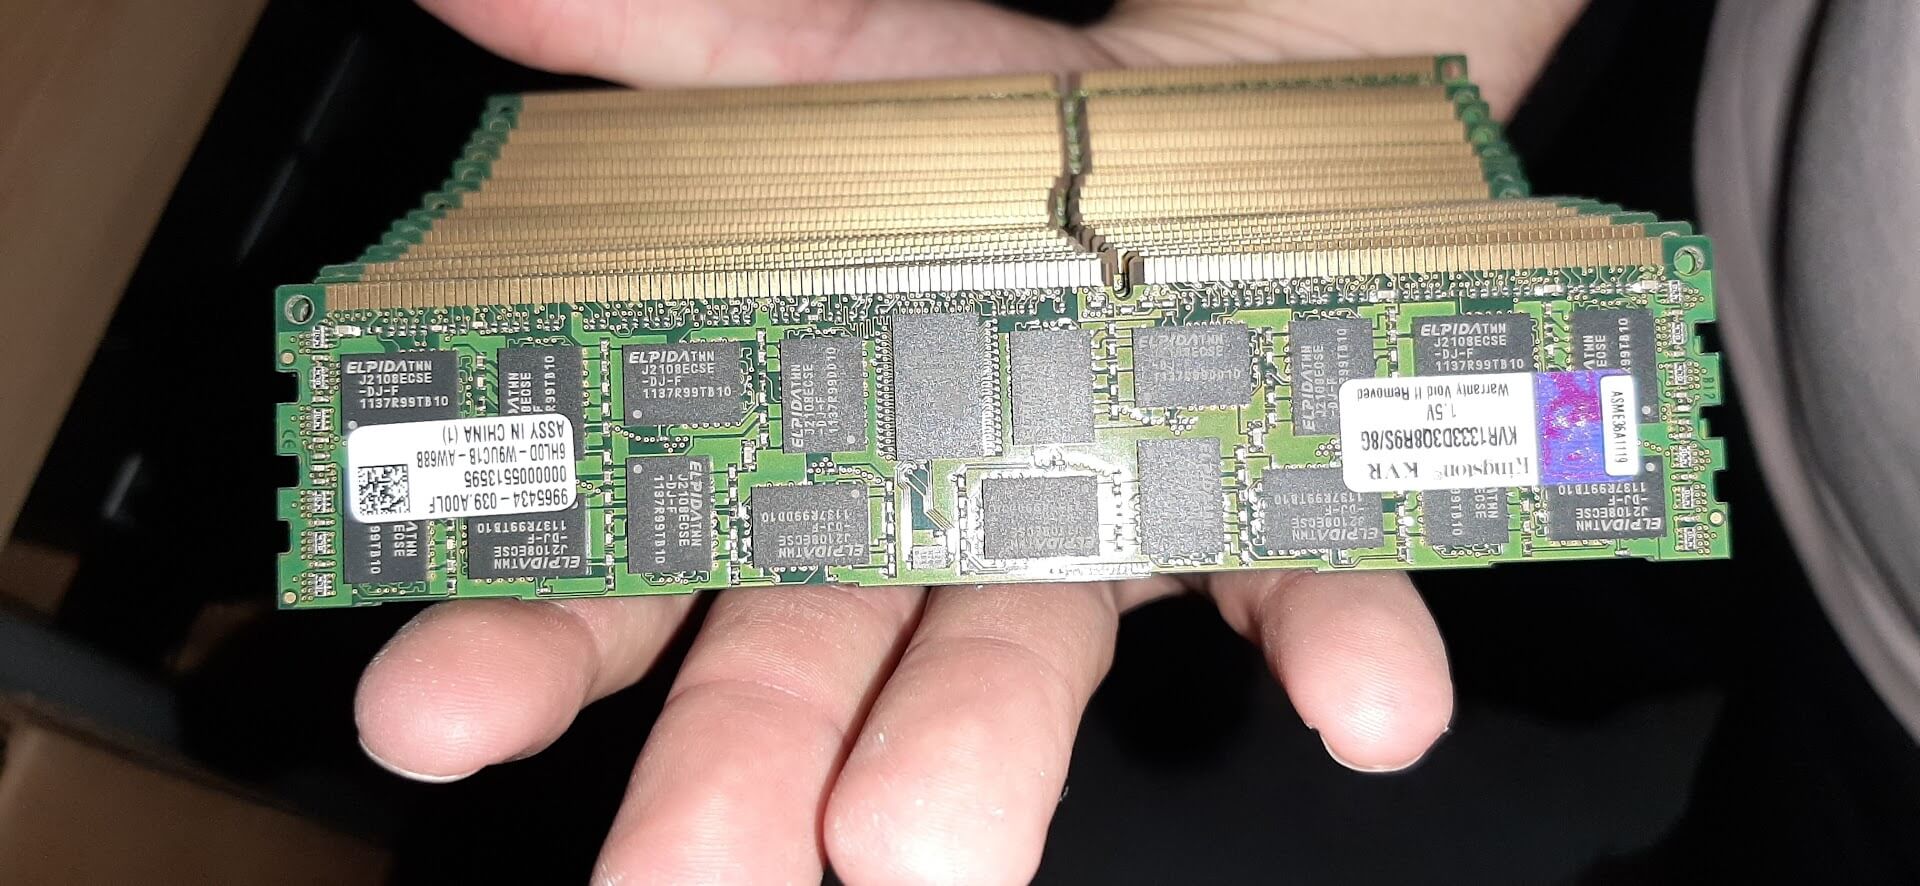 Gobs of DDR3